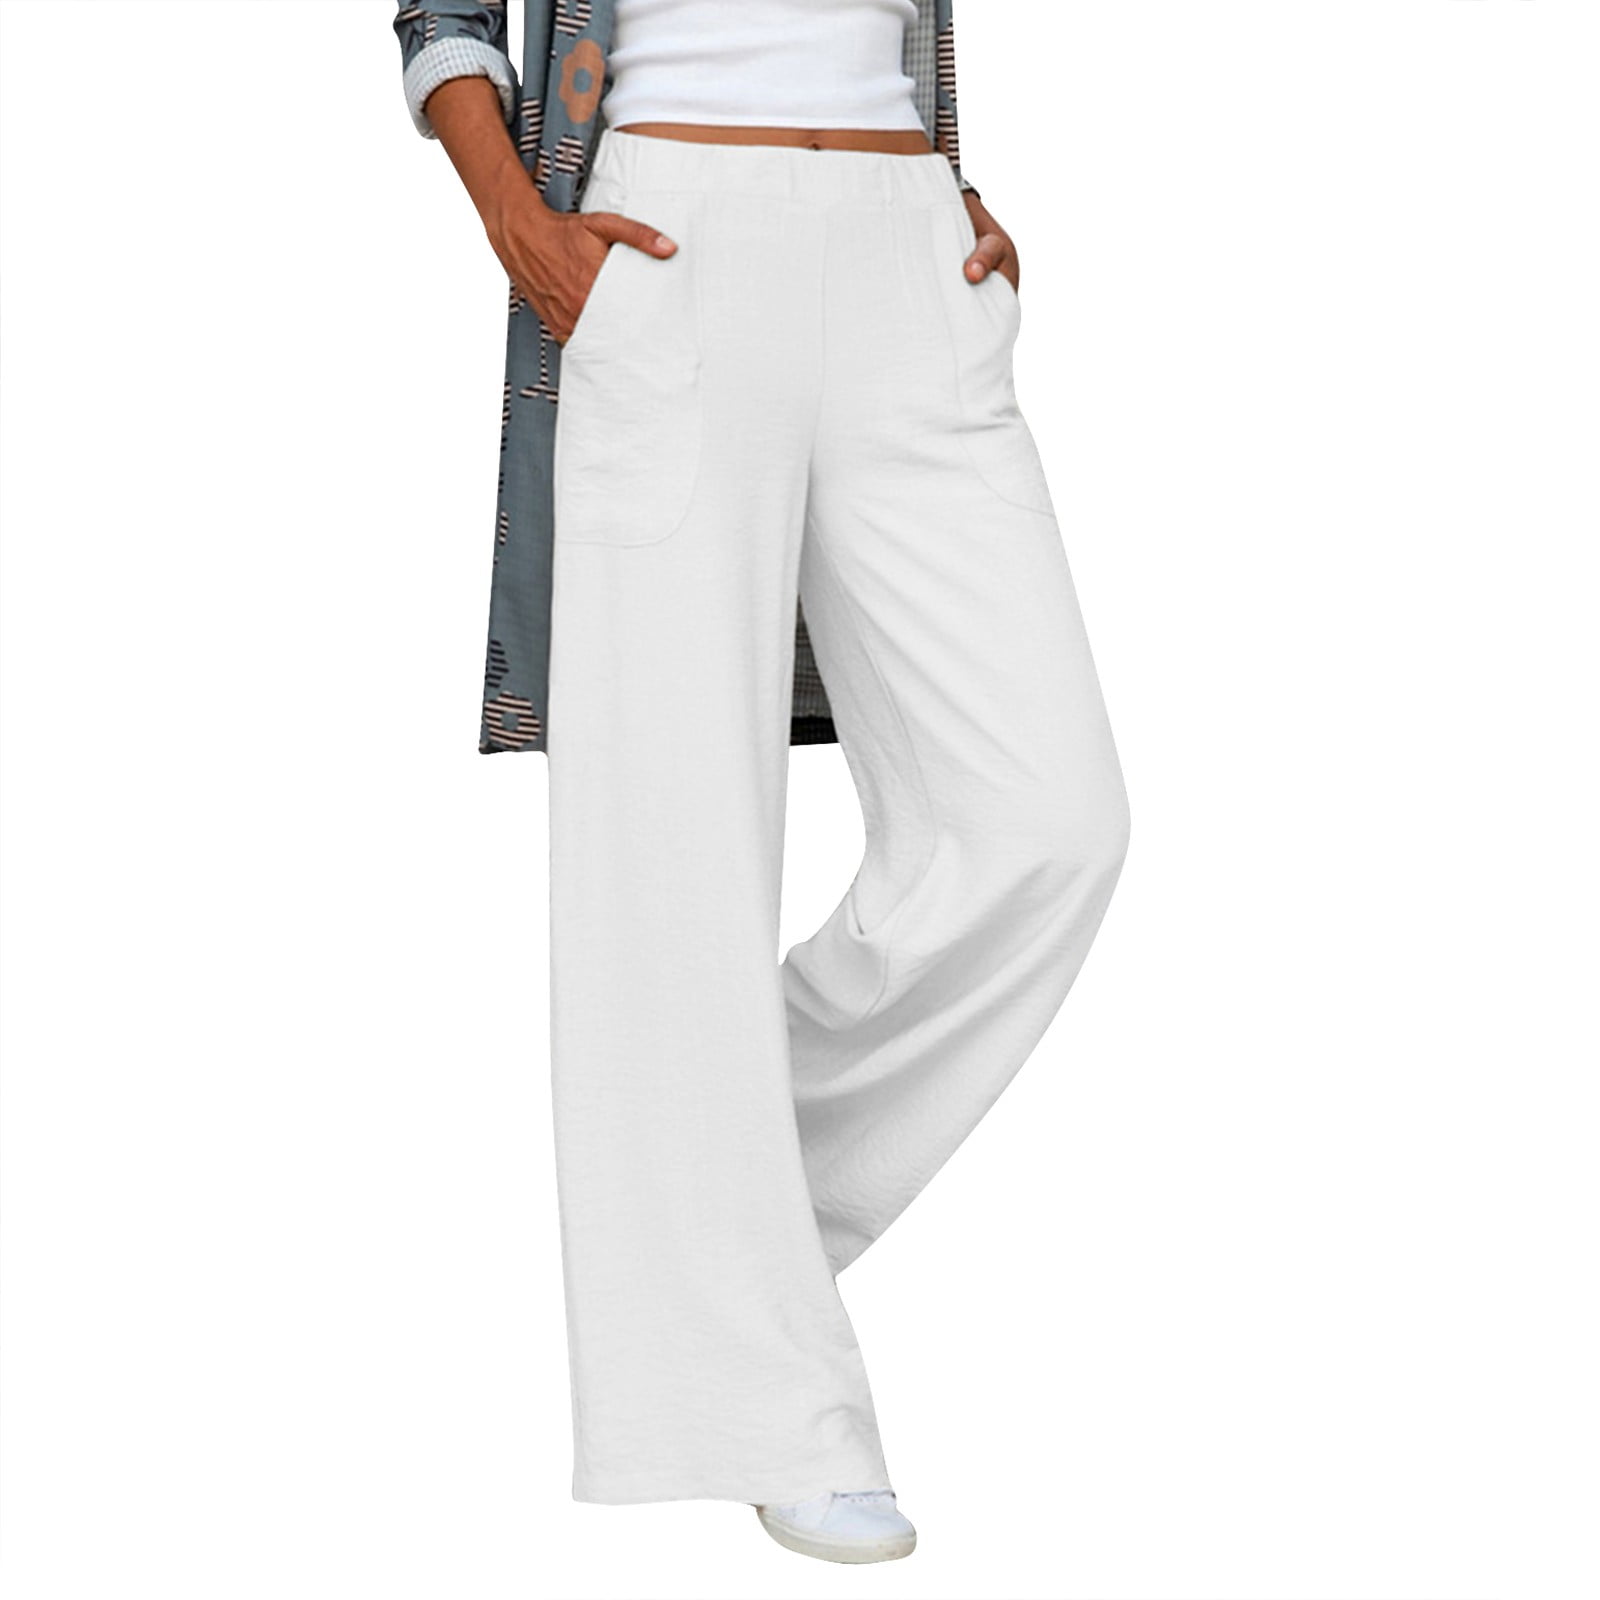 Vekdone Under 100 Dollars Wide Leg Linen Pants for Women Overstock Items Clearance All Prime, Men's, Size: Large, White